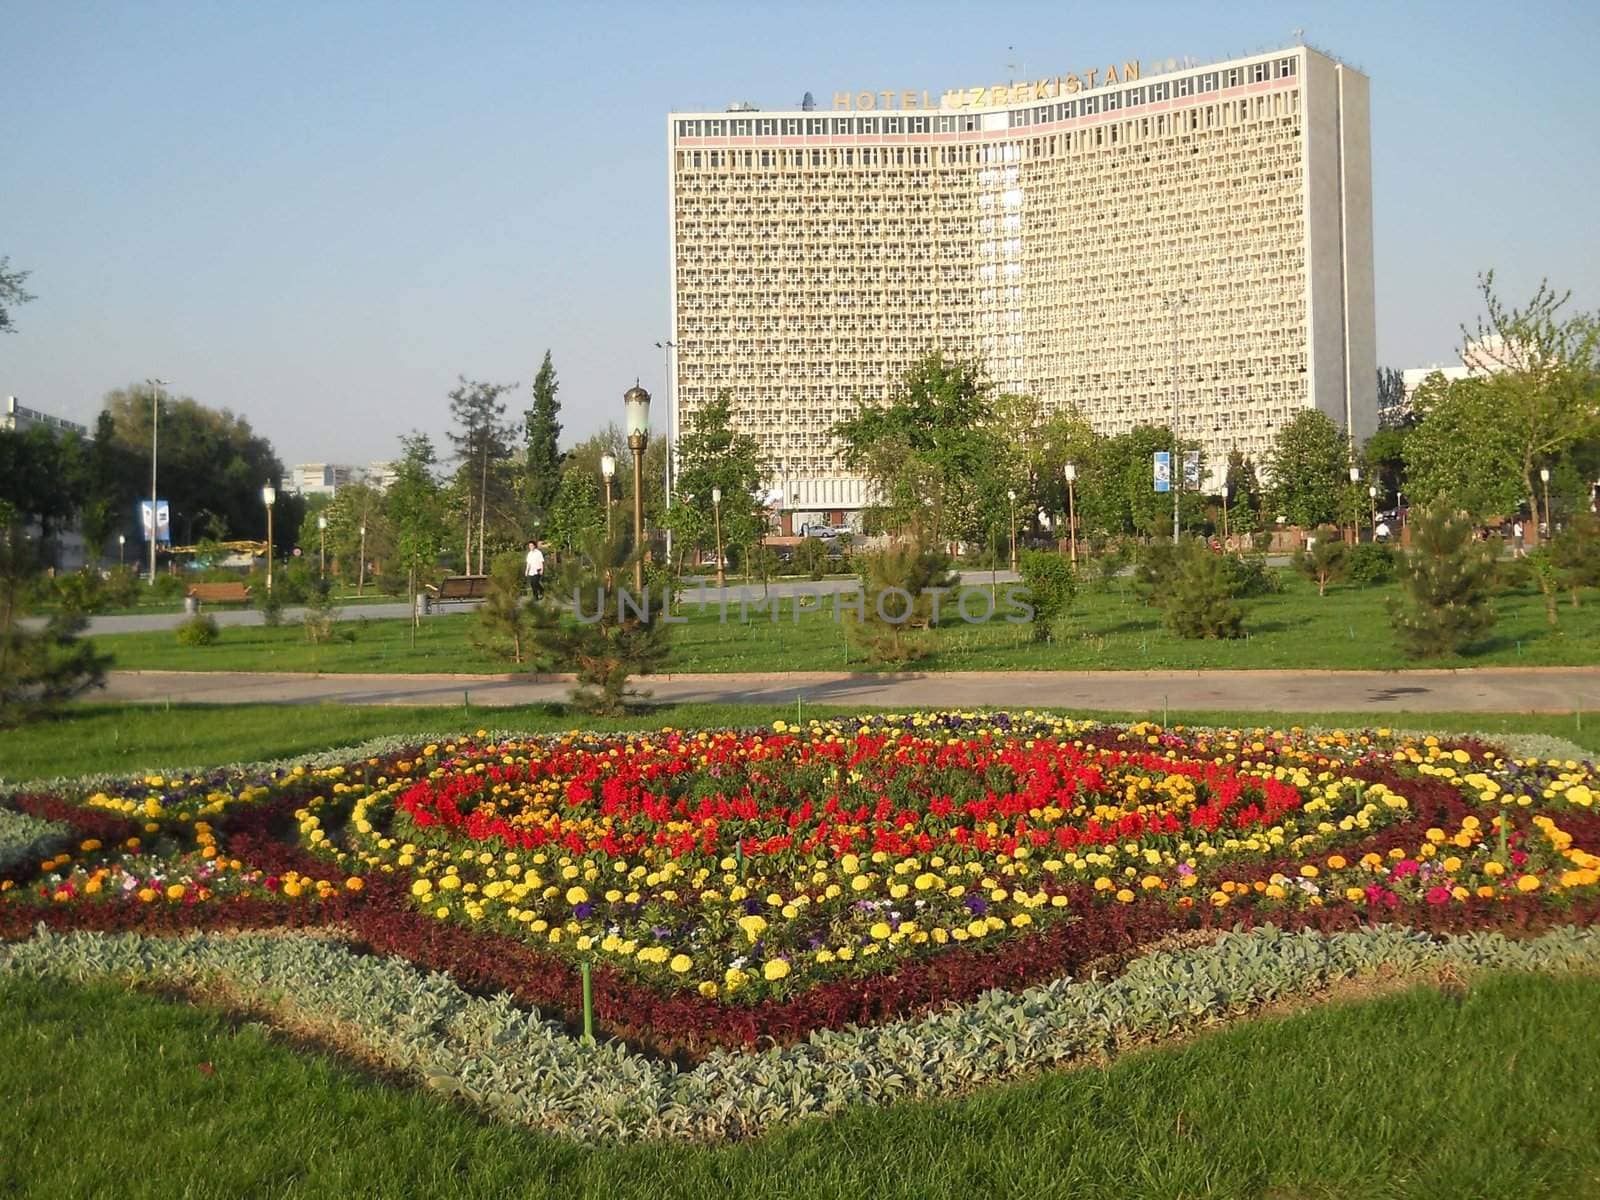 Hotel Uzbekistan 2 by georg777